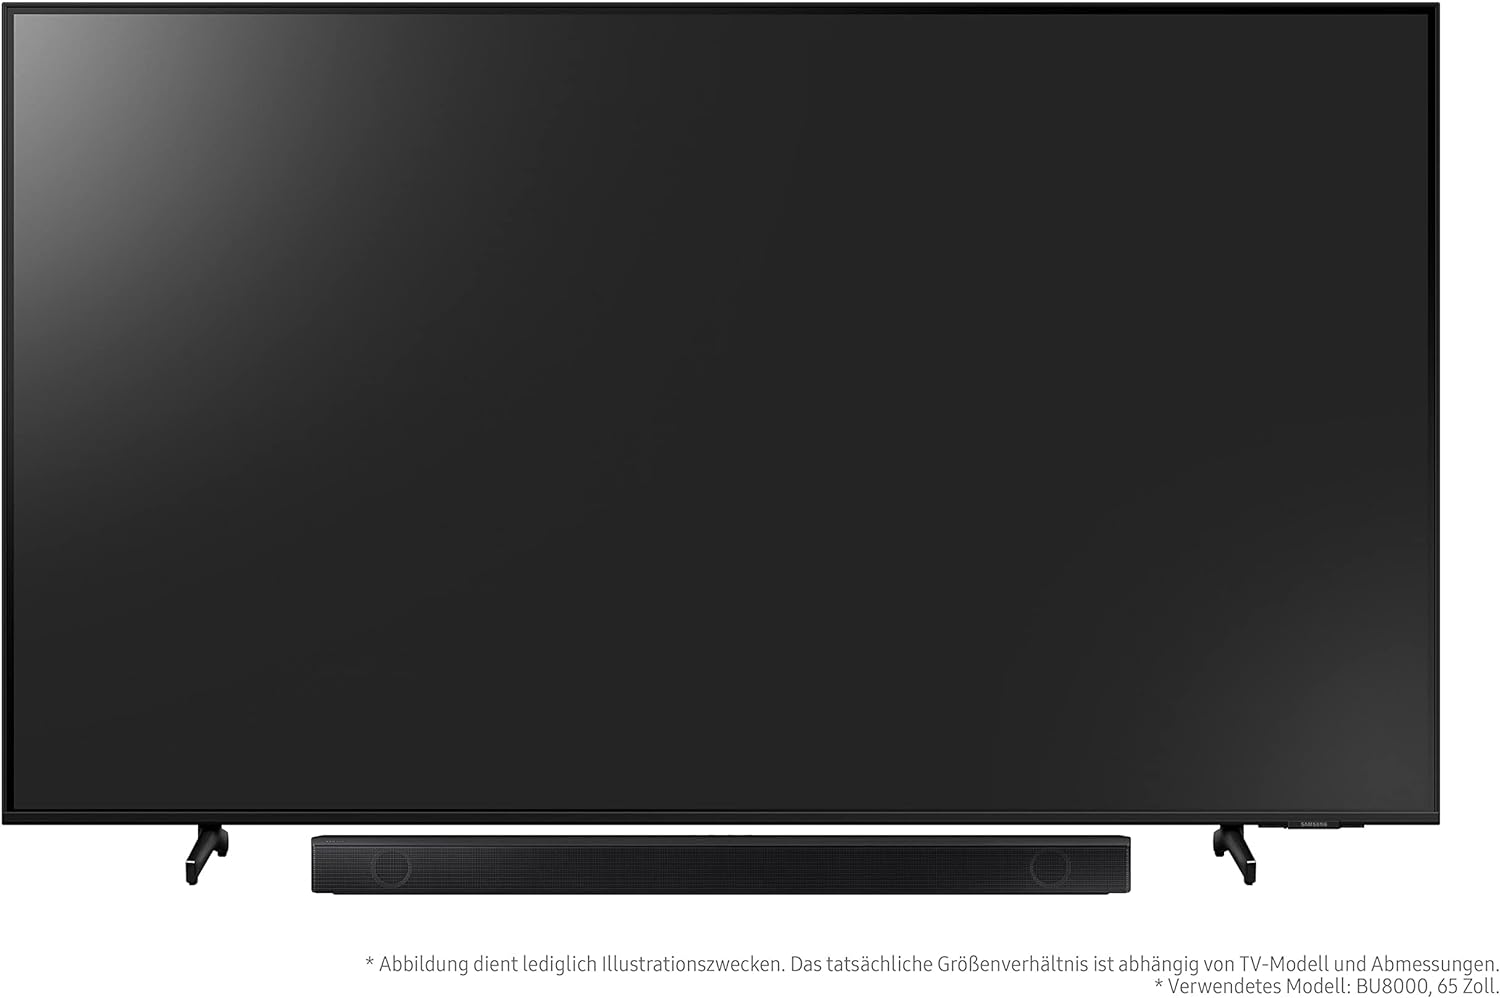 Samsung HW-B540 Soundbar speaker Black 2.1 channels - 2022